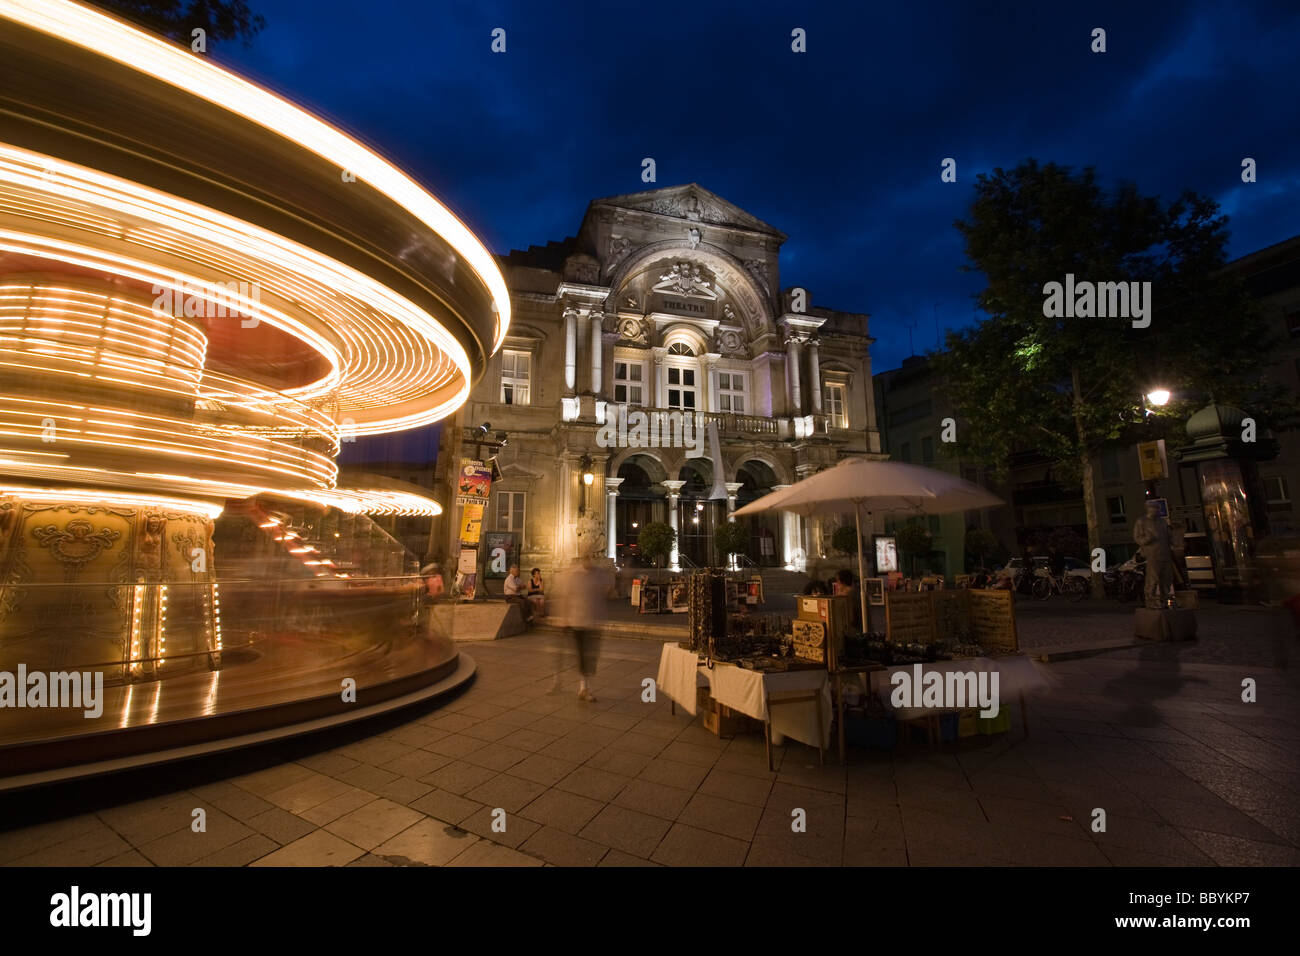 Carousel, Opera, theatre,town hall, Avignon, France Stock Photo